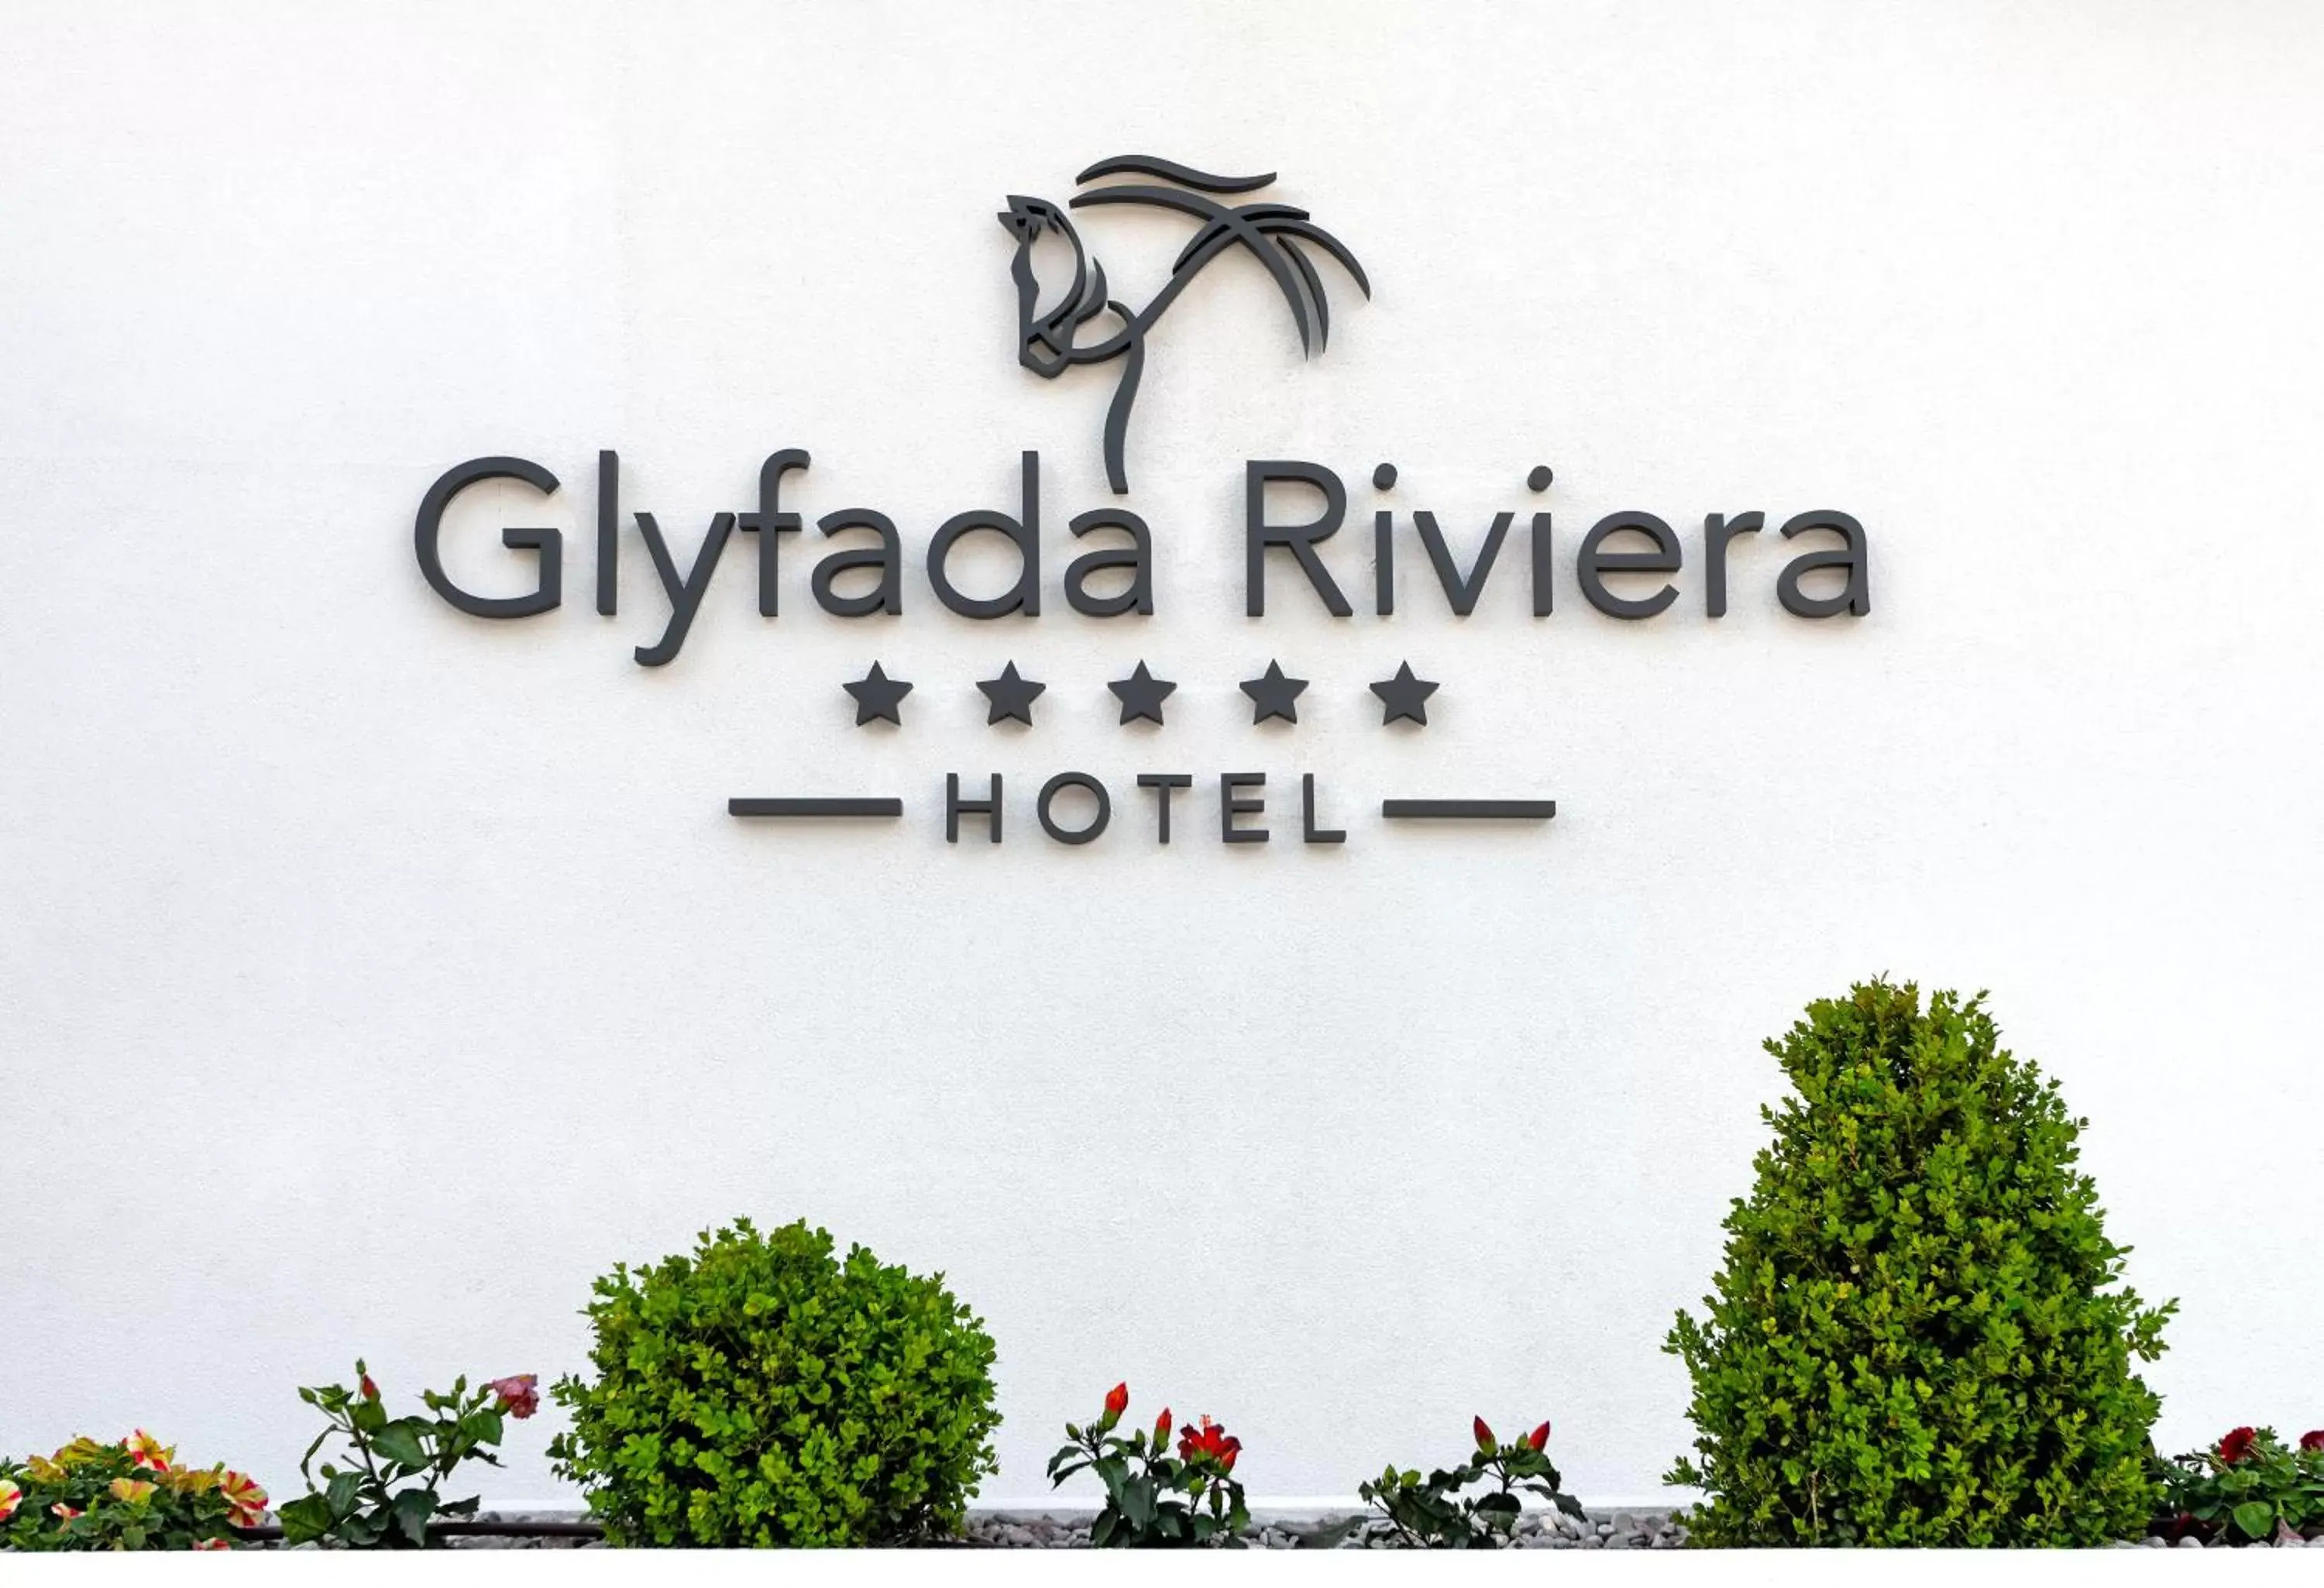 Property logo or sign in Glyfada Riviera Hotel